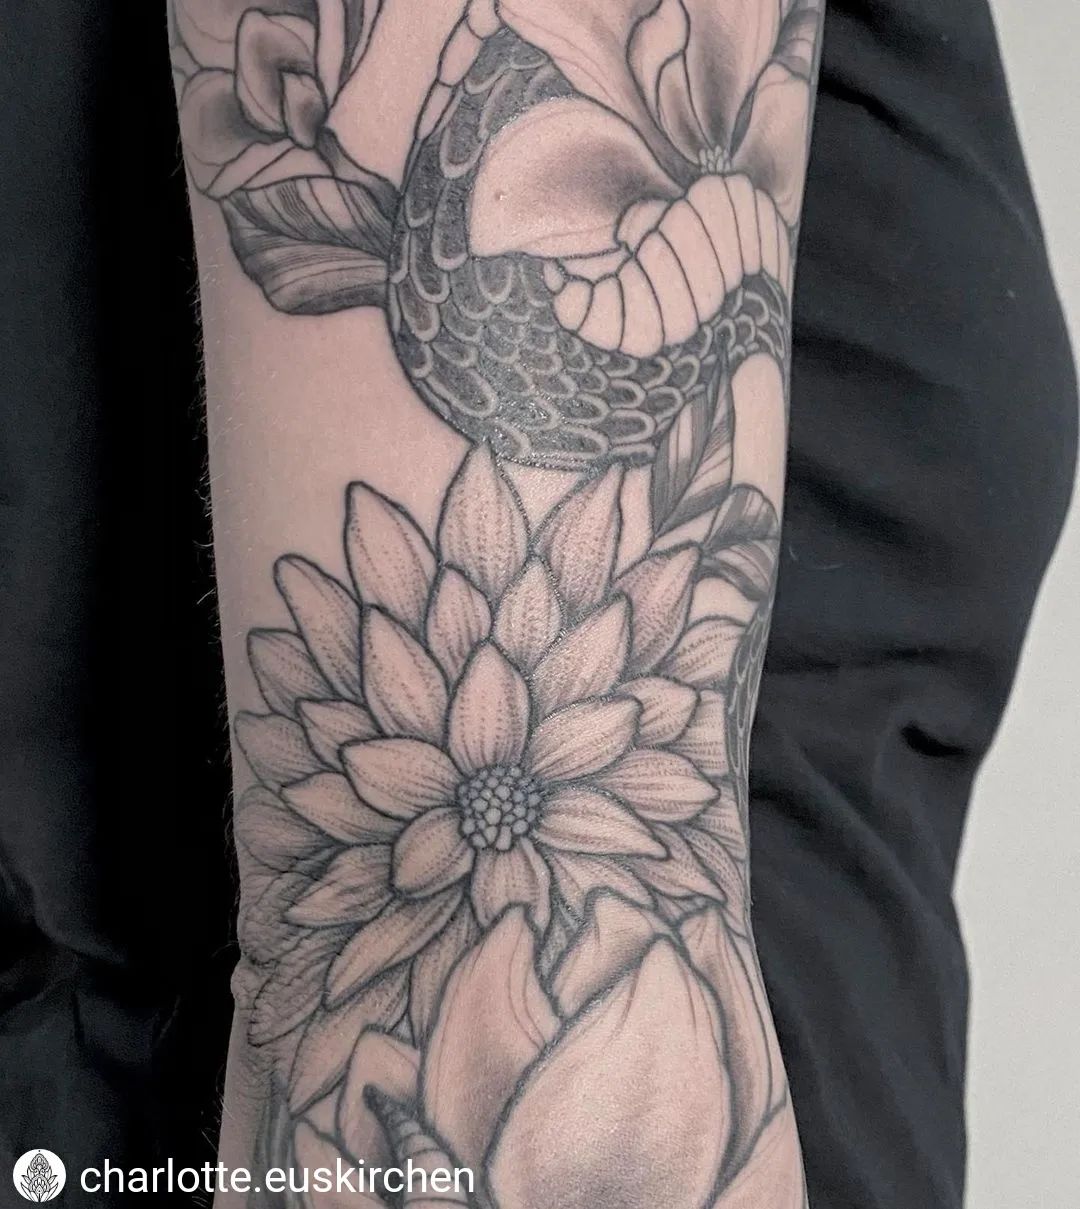 Neu von @charlotte.euskirchen
•••••••
In Arbeit auf Svenja 
.
.
.

#tattoo #tatt